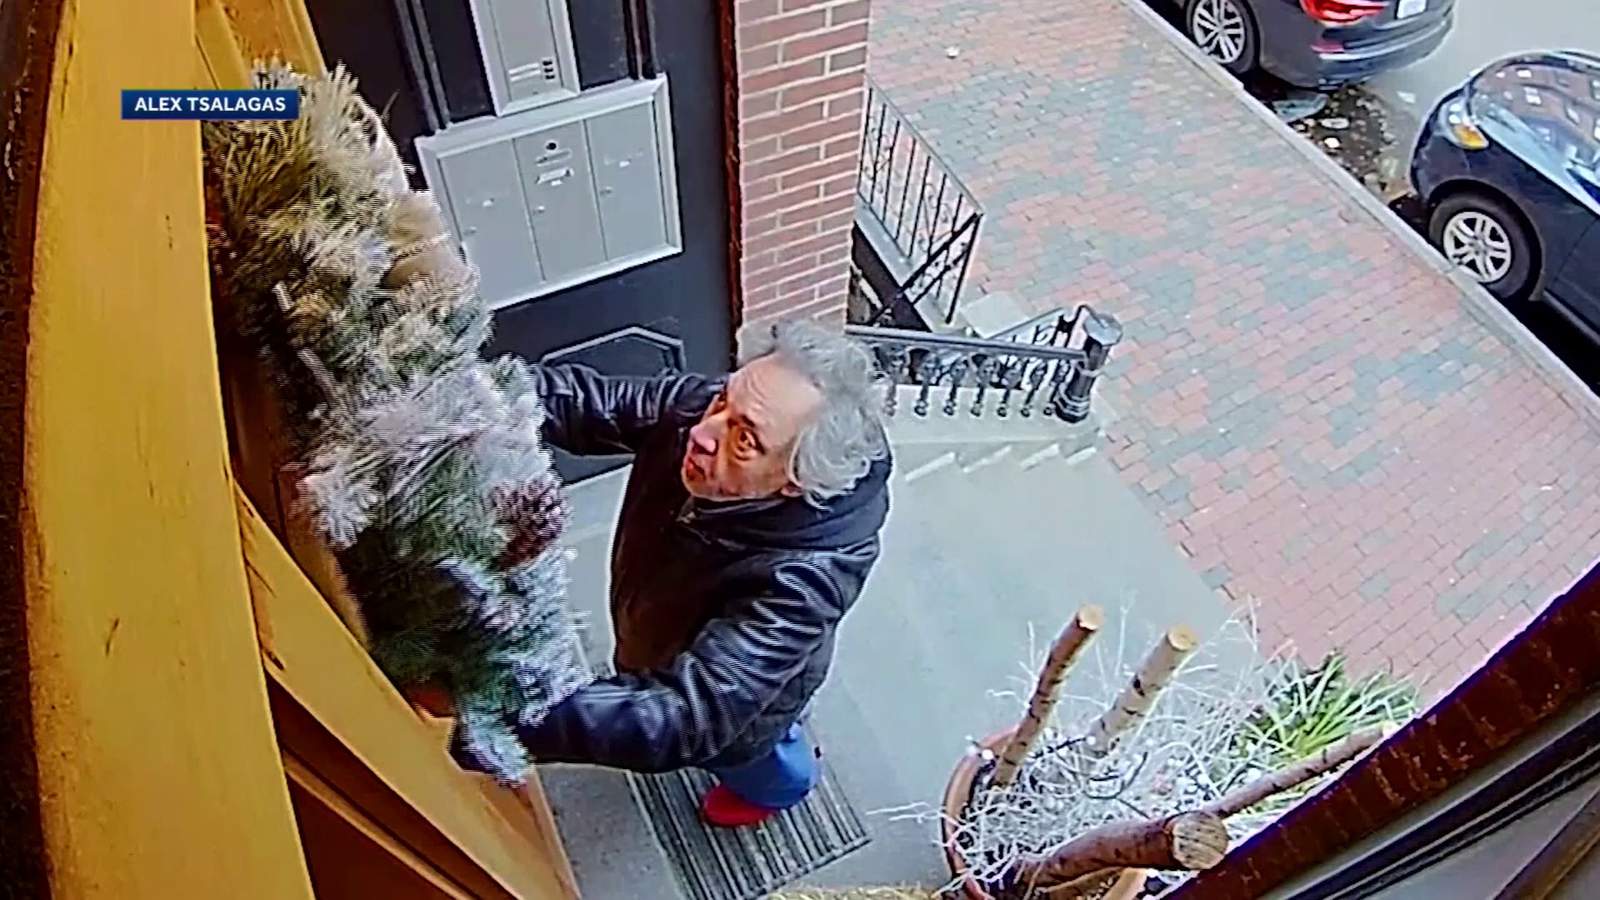 Alleged wreath thief caught on camera